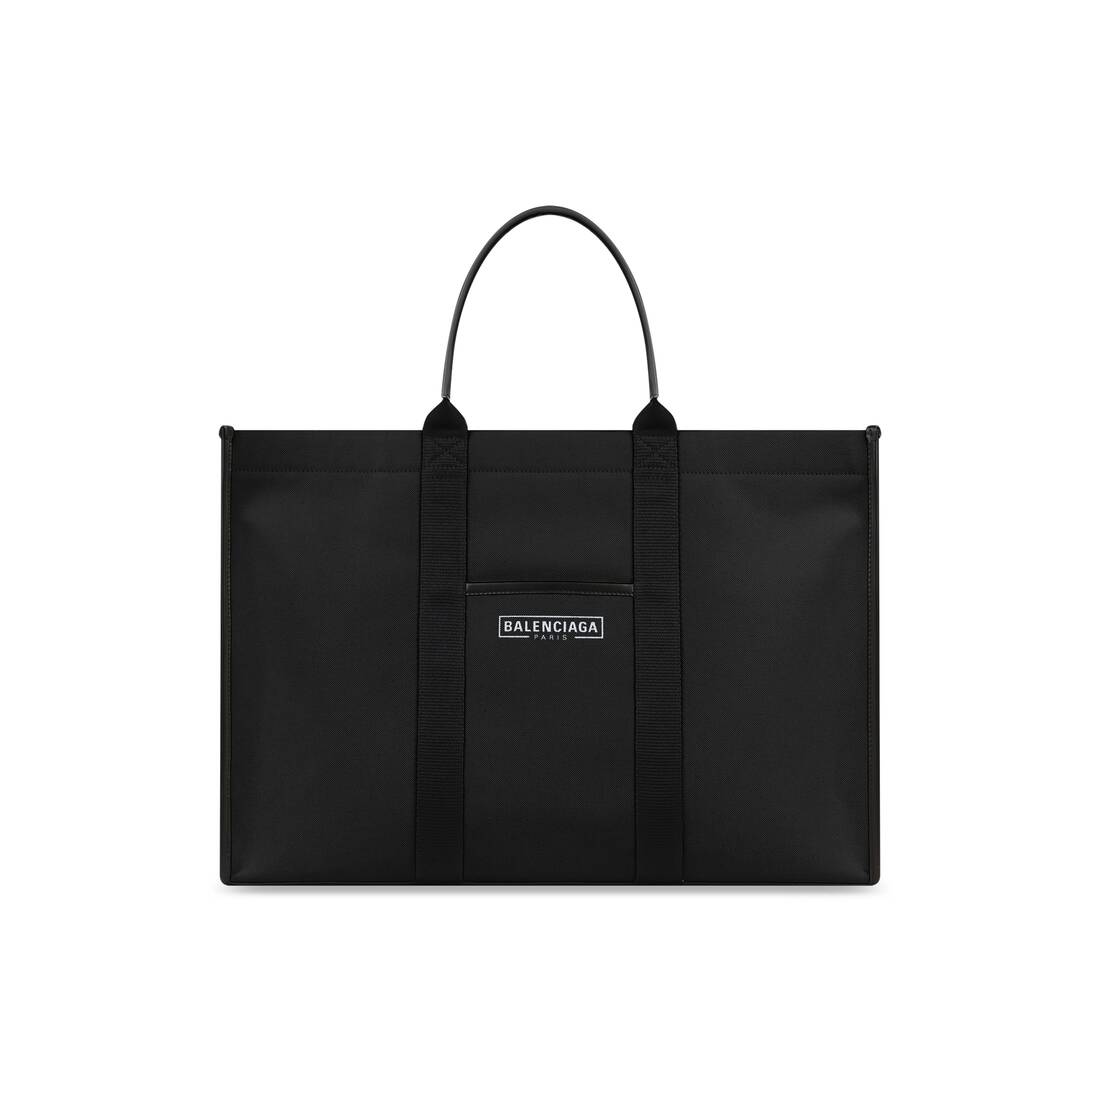 Balenciaga Men's Hardware Large Tote Bag